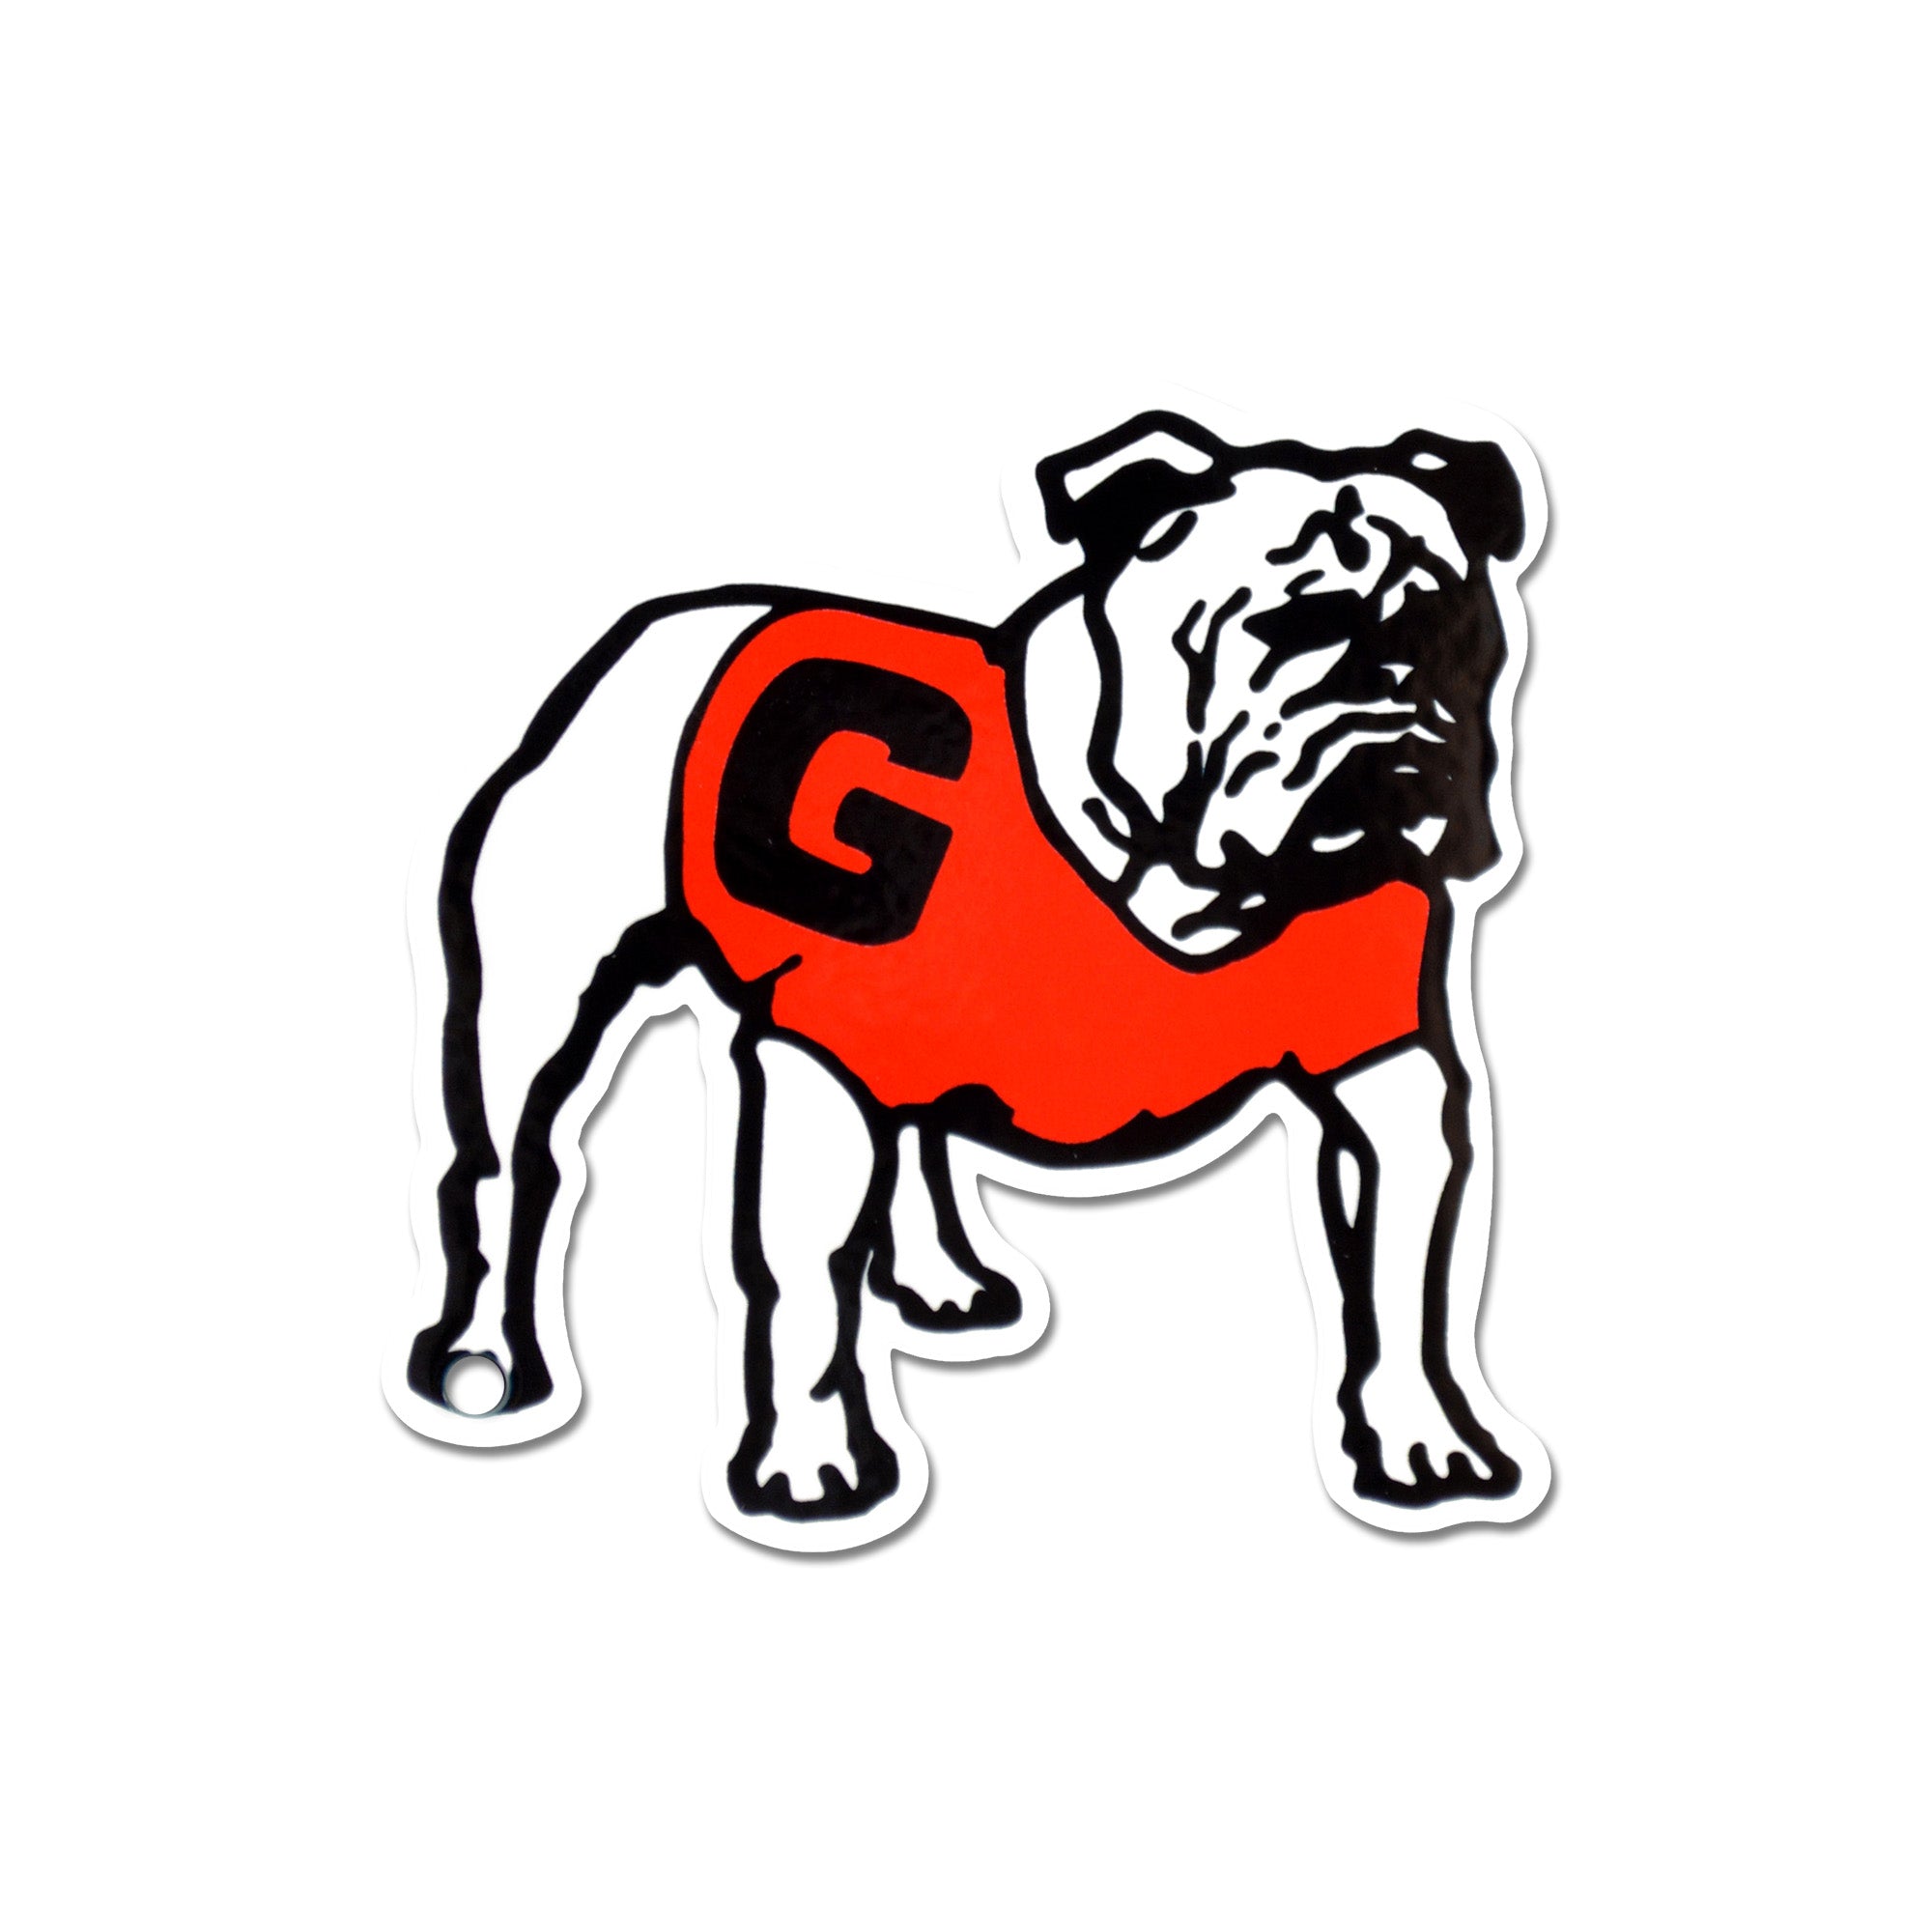 Georgia Bulldogs NCAA Vintage Georgia Football Team Jersey